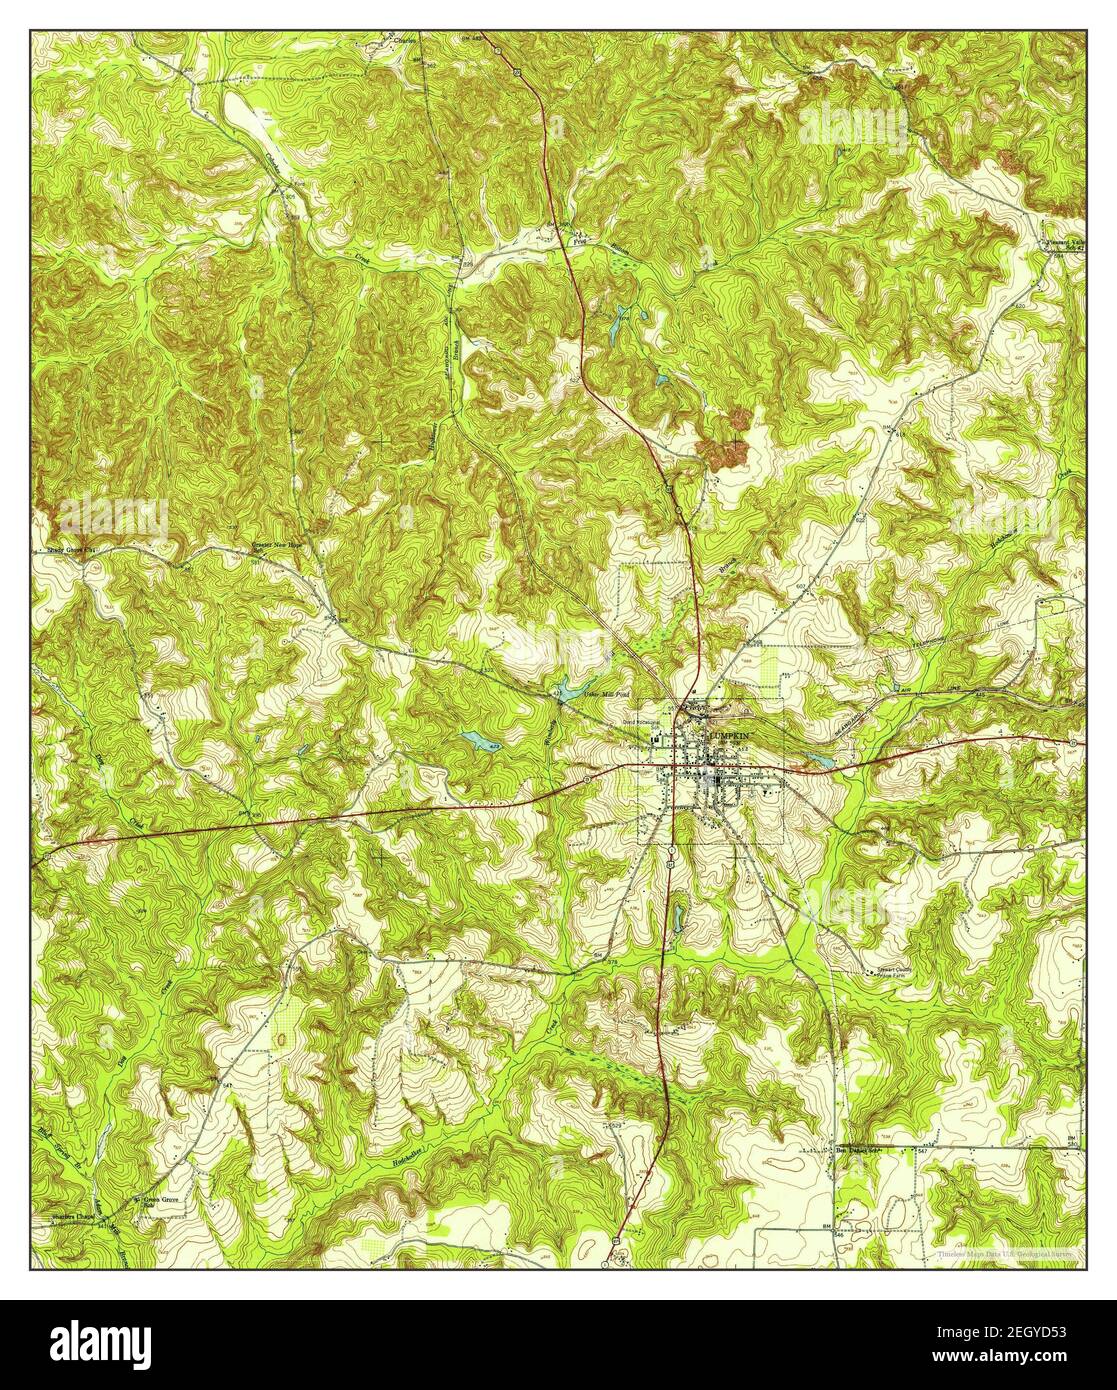 Lumpkin, Georgia, map 1950, 1:24000, United States of America by Timeless Maps, data U.S. Geological Survey Stock Photo